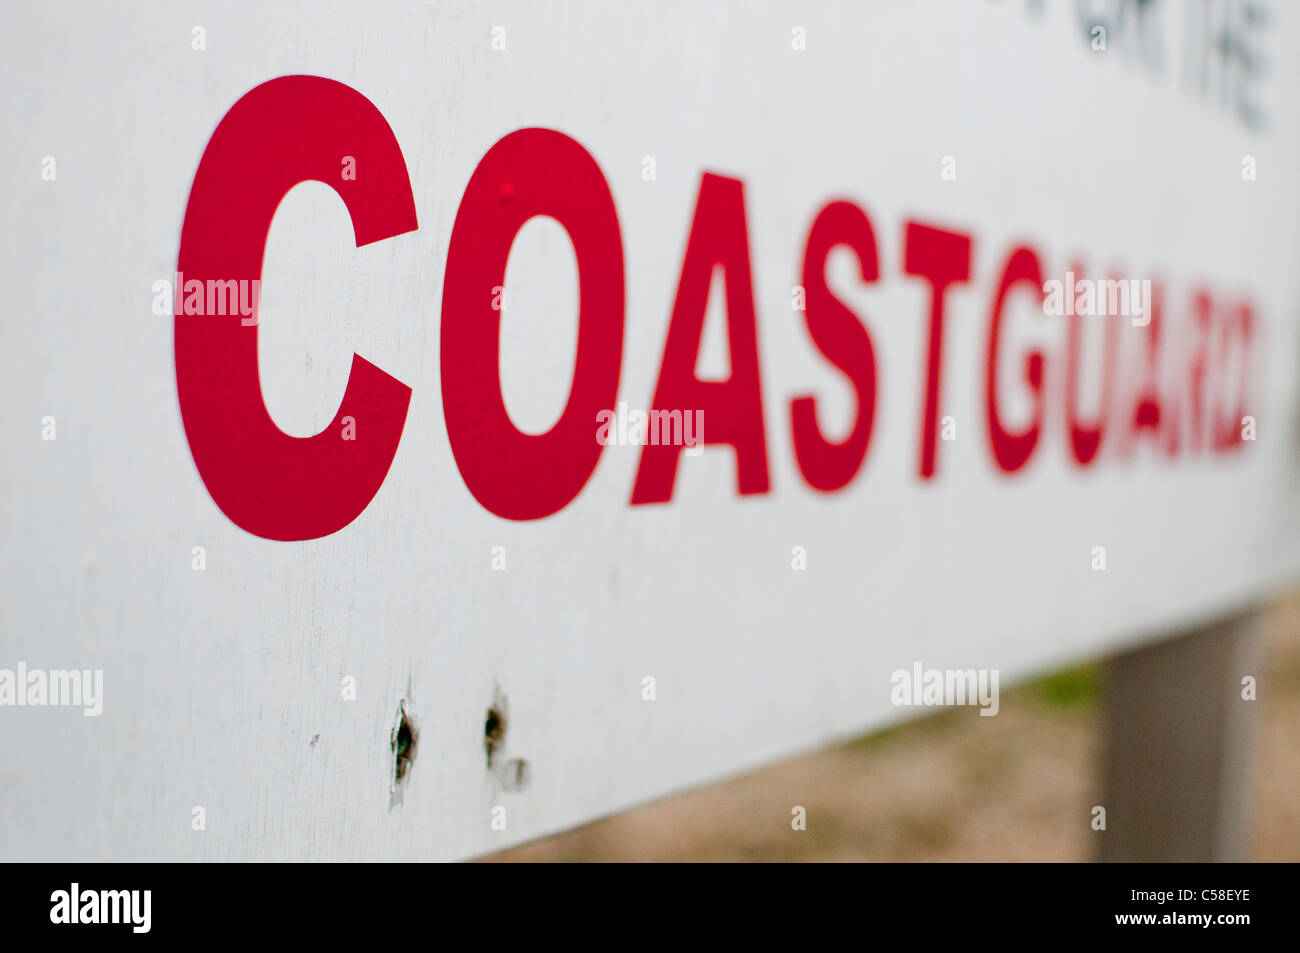 coastguard sign Stock Photo